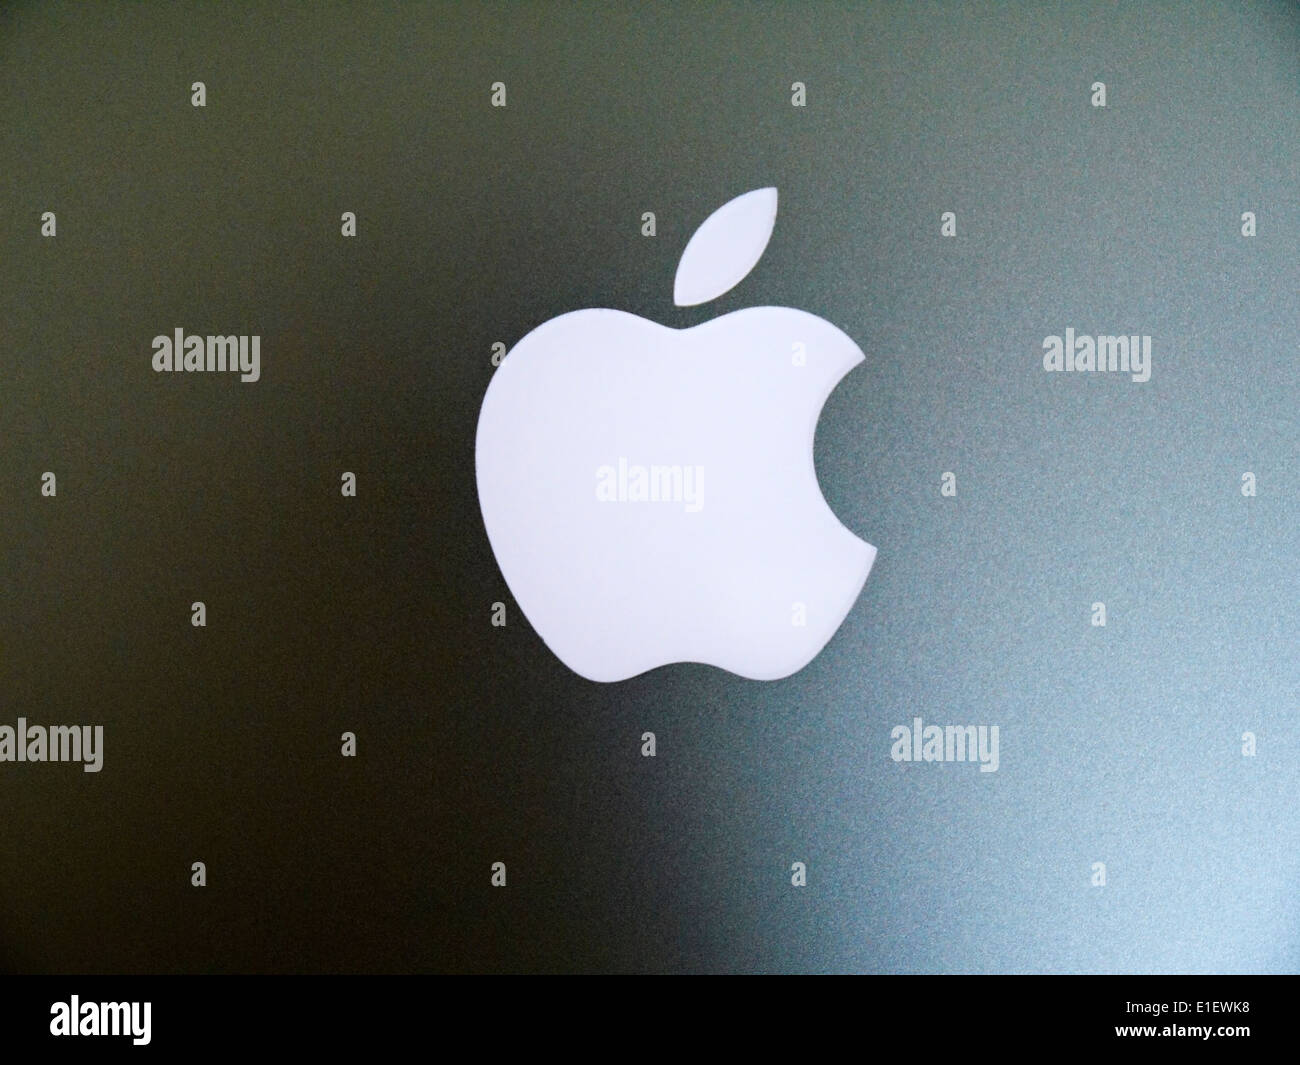 apple-logo-E1EWK8.jpg